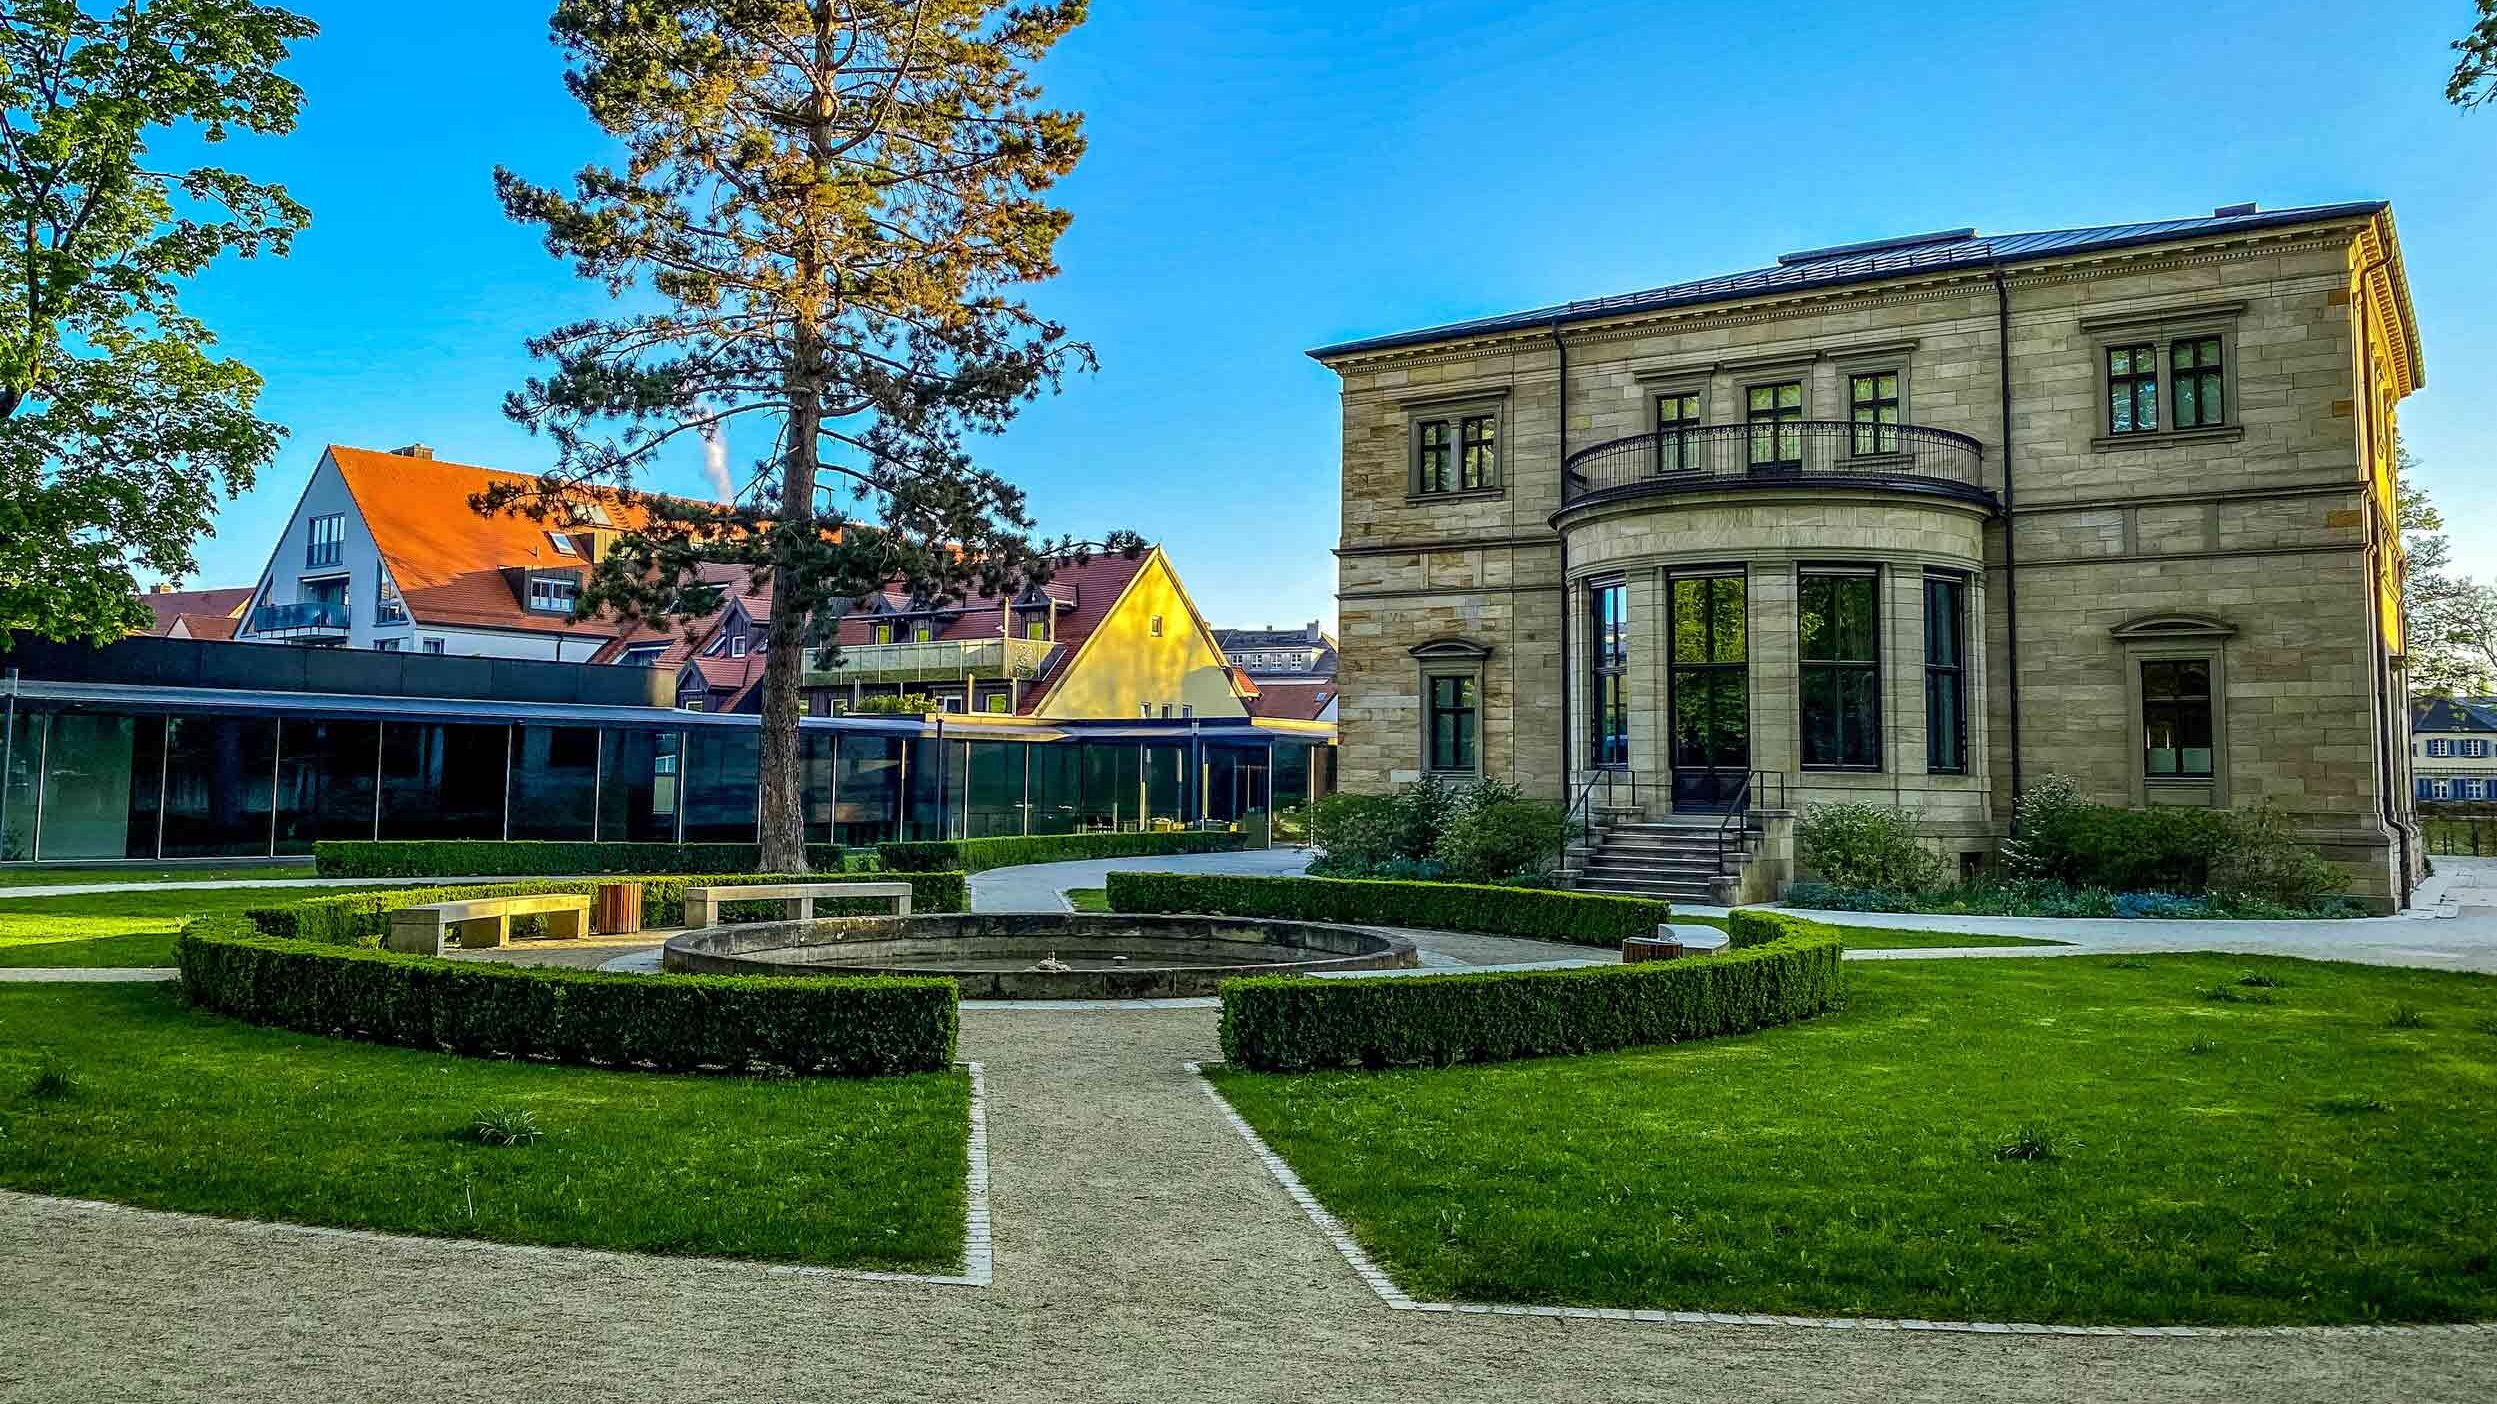 Haus Wahnfried - Richard-Wagner-Museum